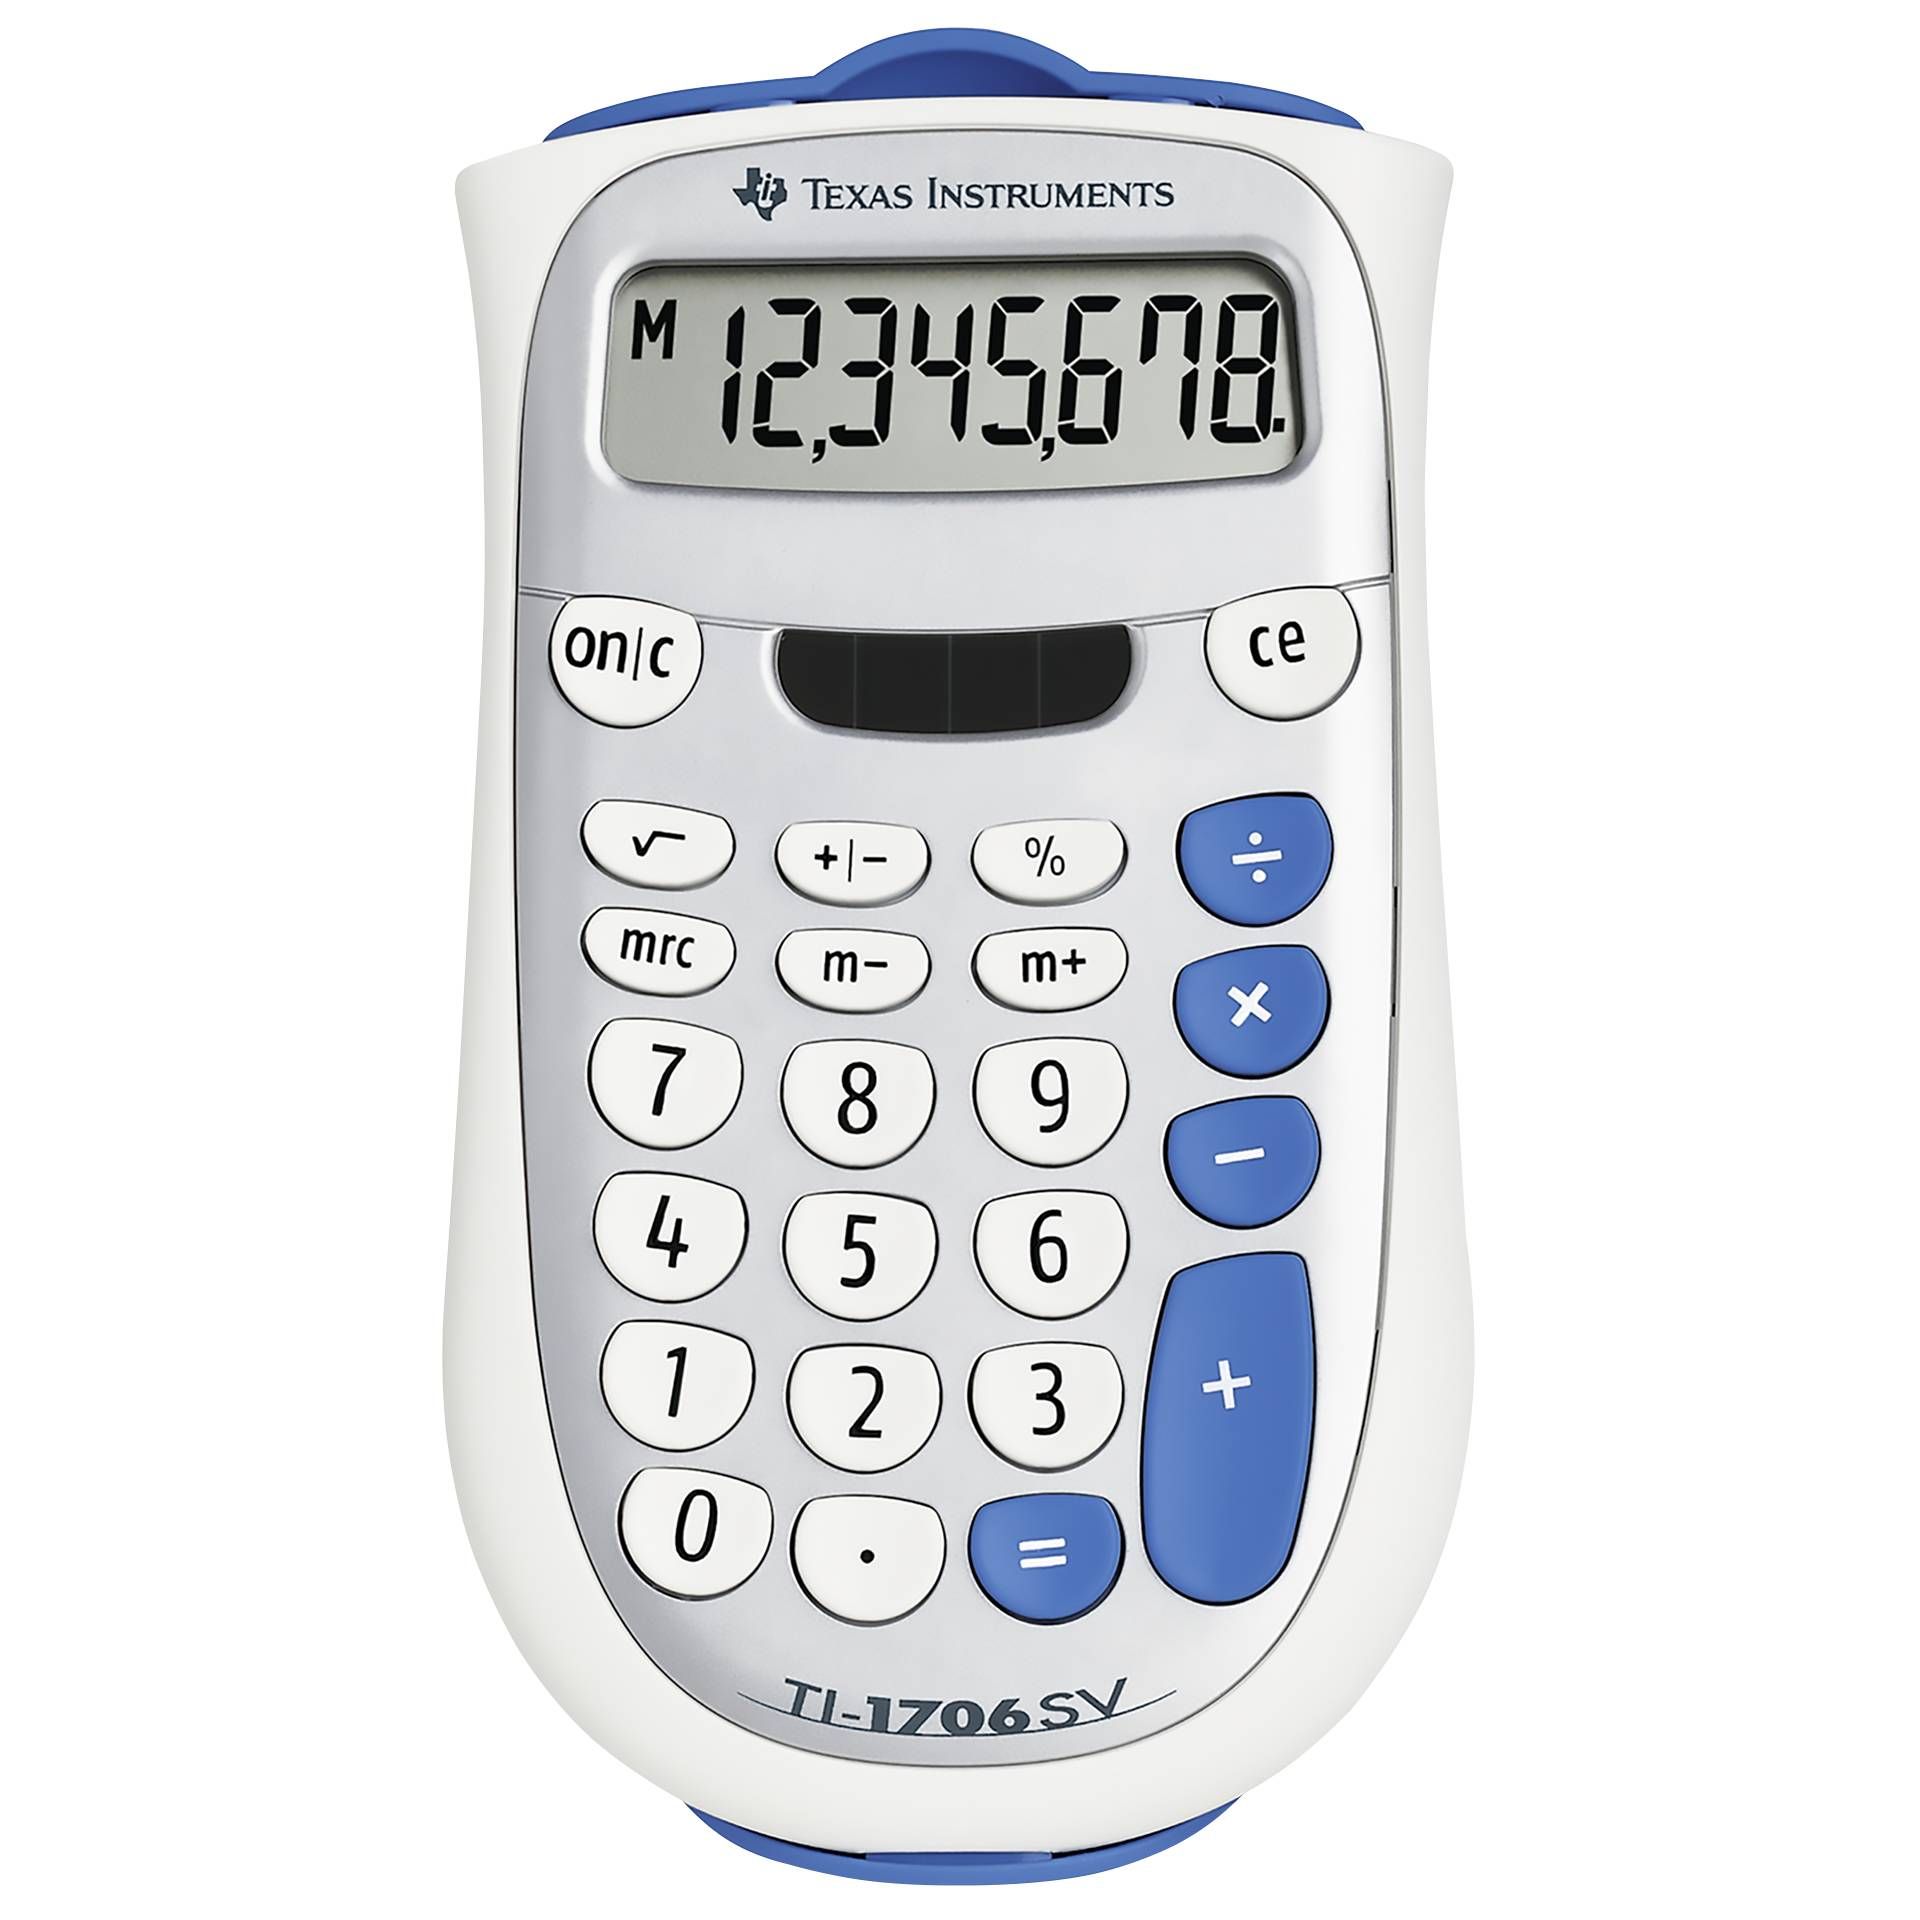 Texas Instruments TI 1706 SV